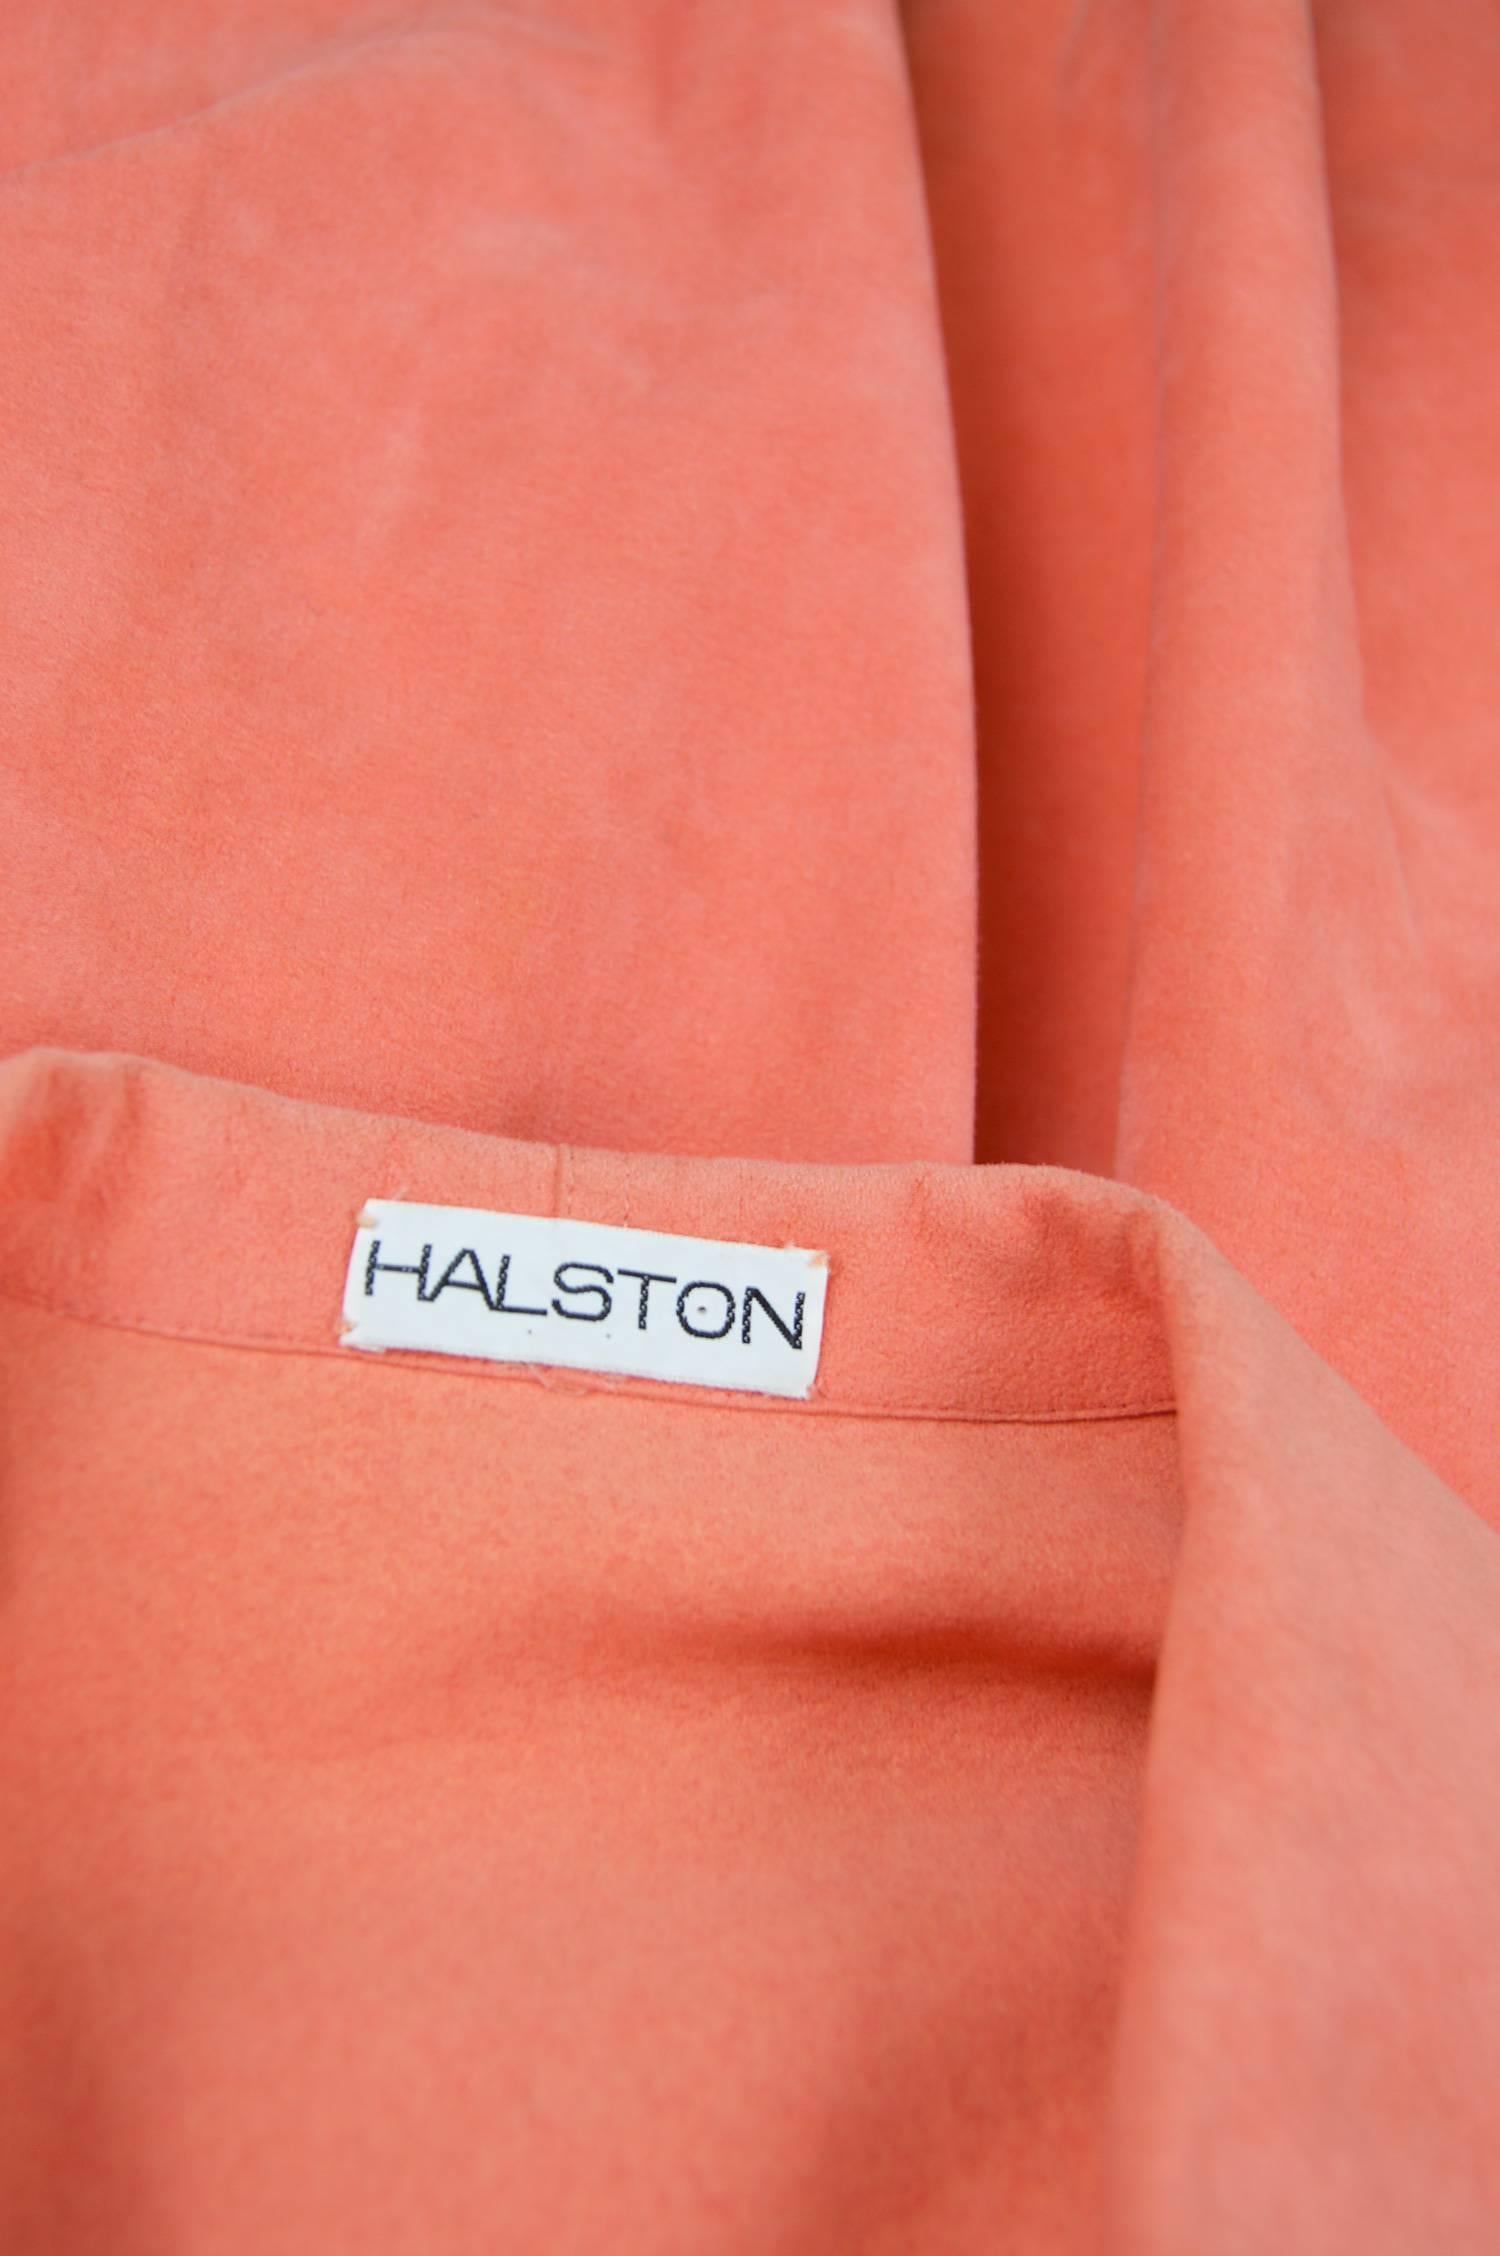 Halston Vintage Ultrasuede Coral Peach Cap Sleeve Dress, 1970s  4